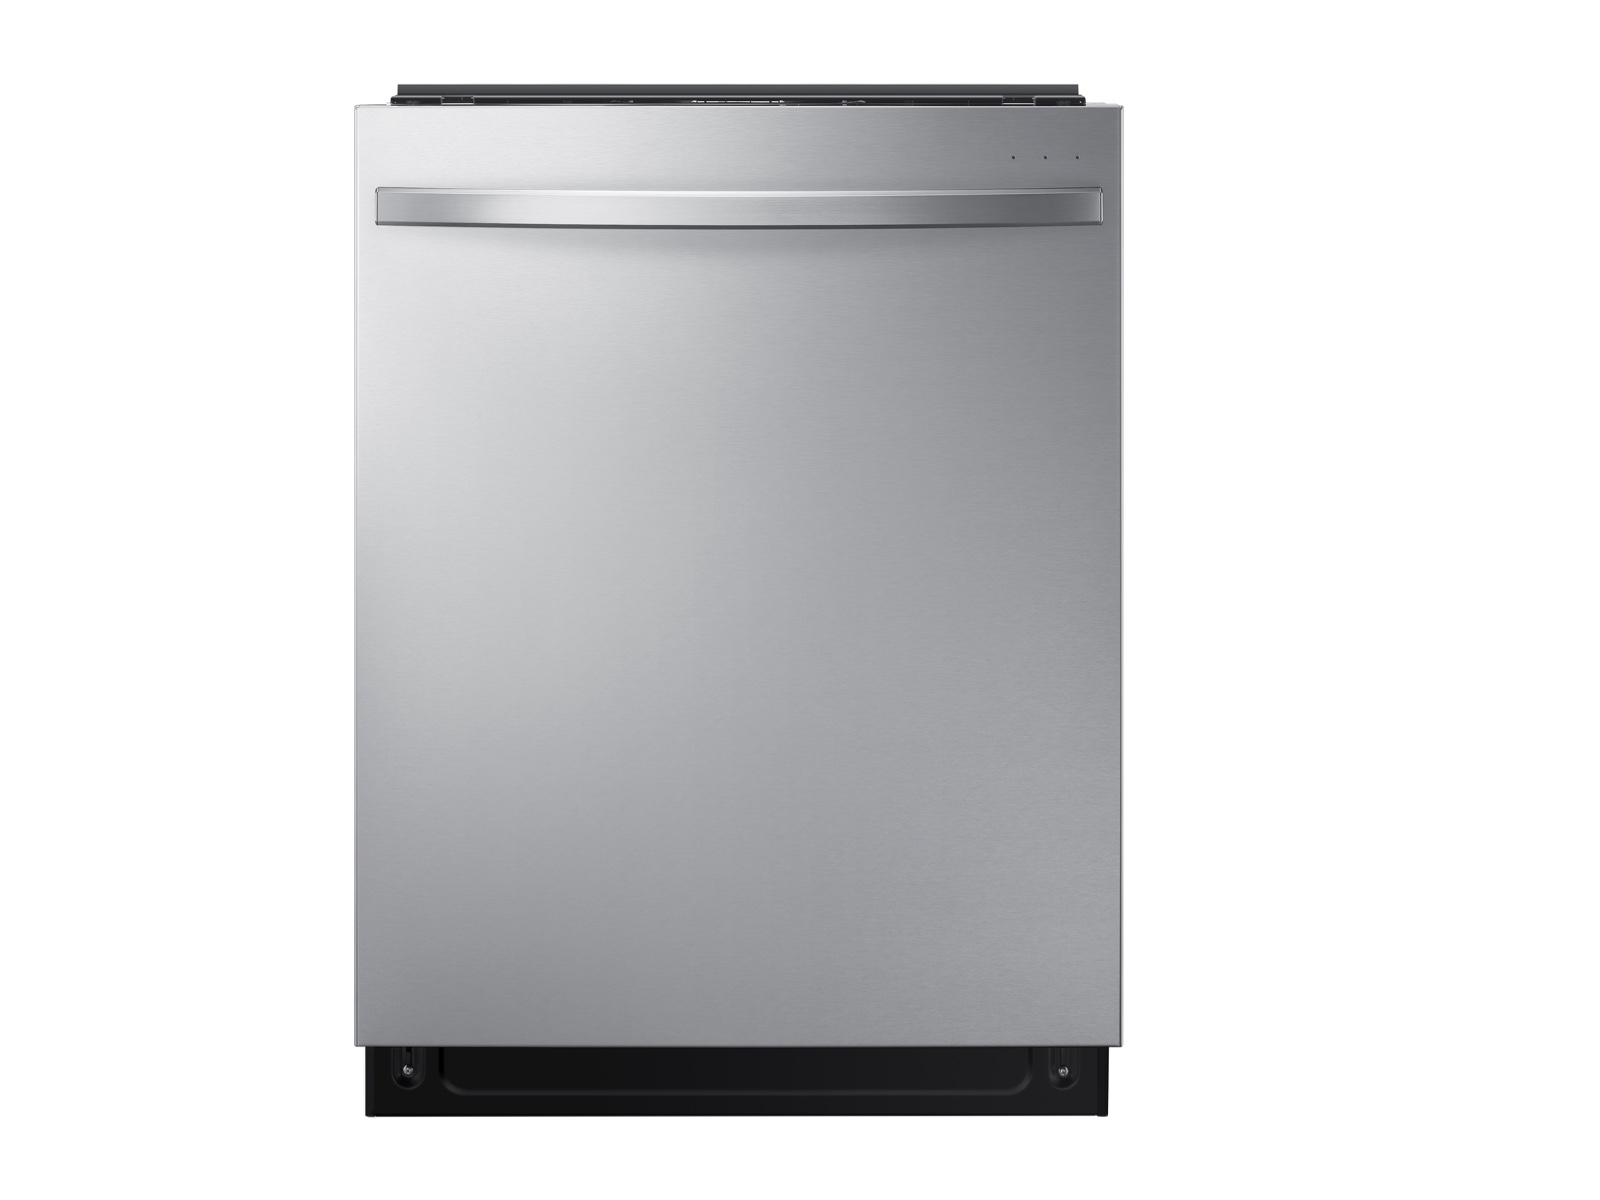 StormWash™ 42 dBA Dishwasher in Stainless Steel Dishwasher - DW80R7061US/AA